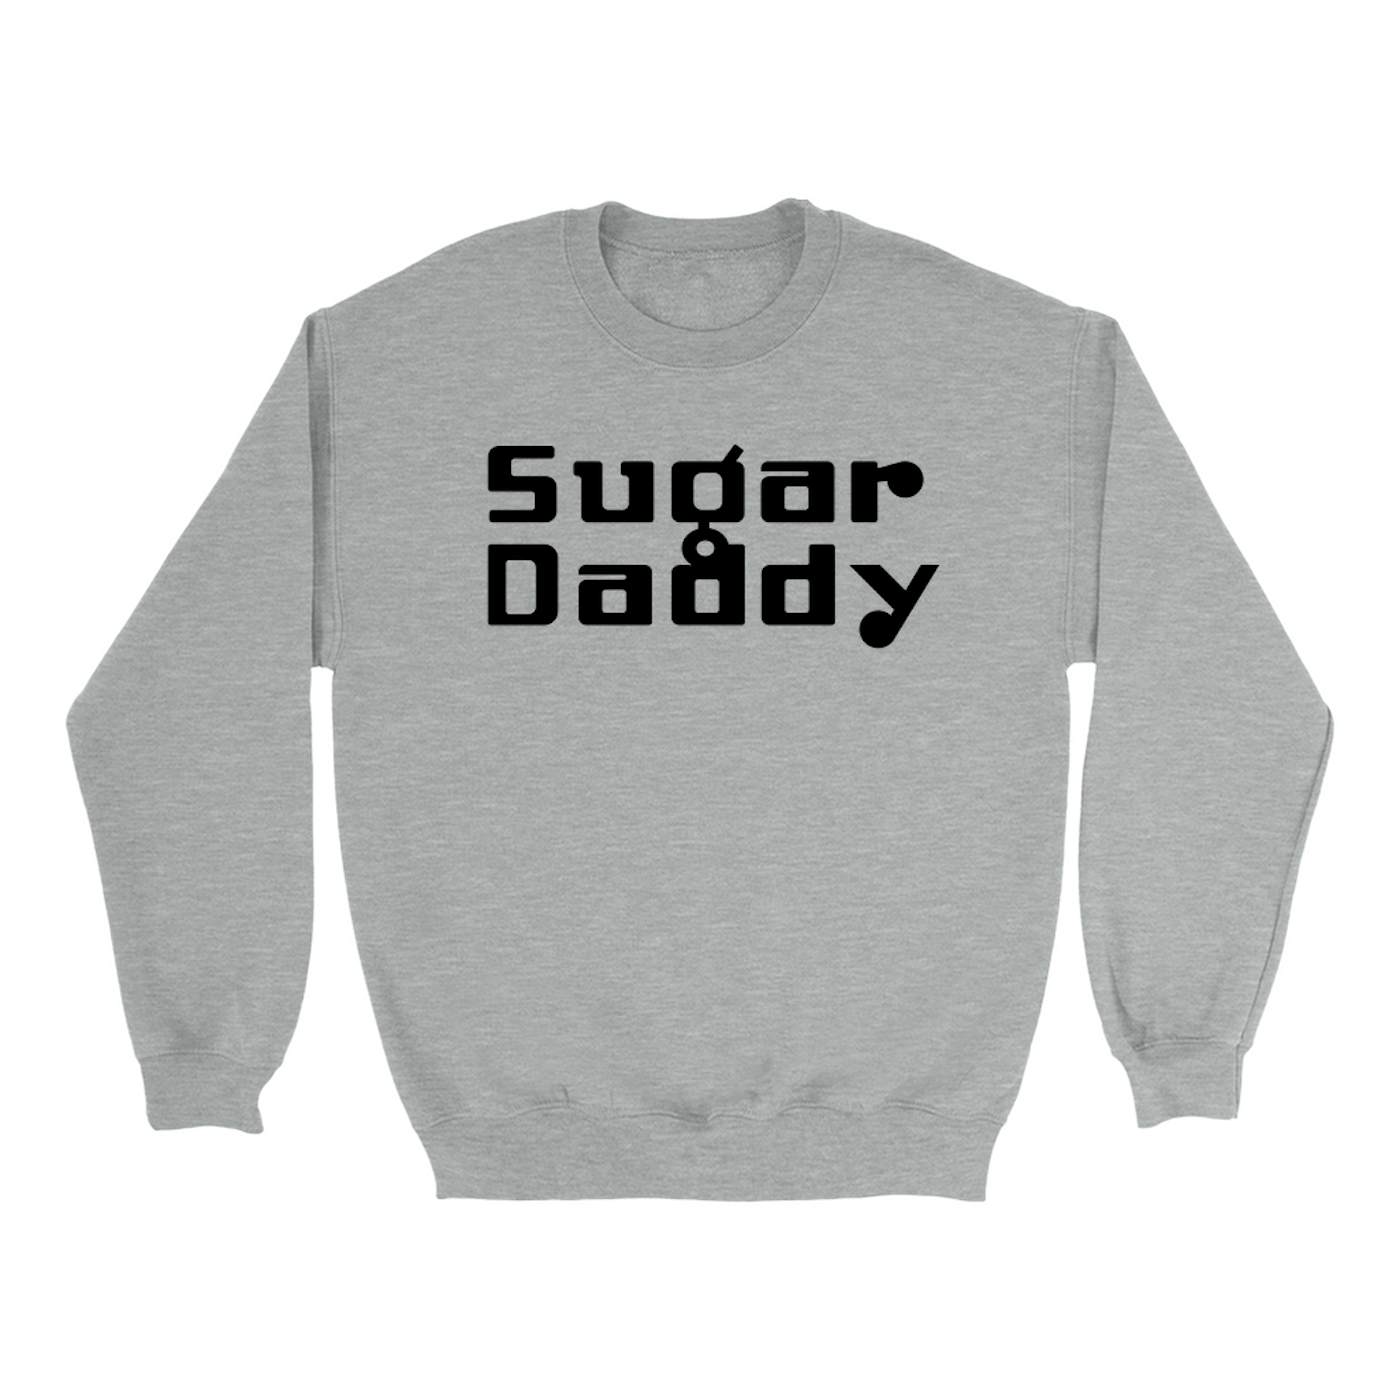 Ramones Sweatshirt | Sugar Daddy Worn By Dee Dee Ramone Ramones Sweatshirt